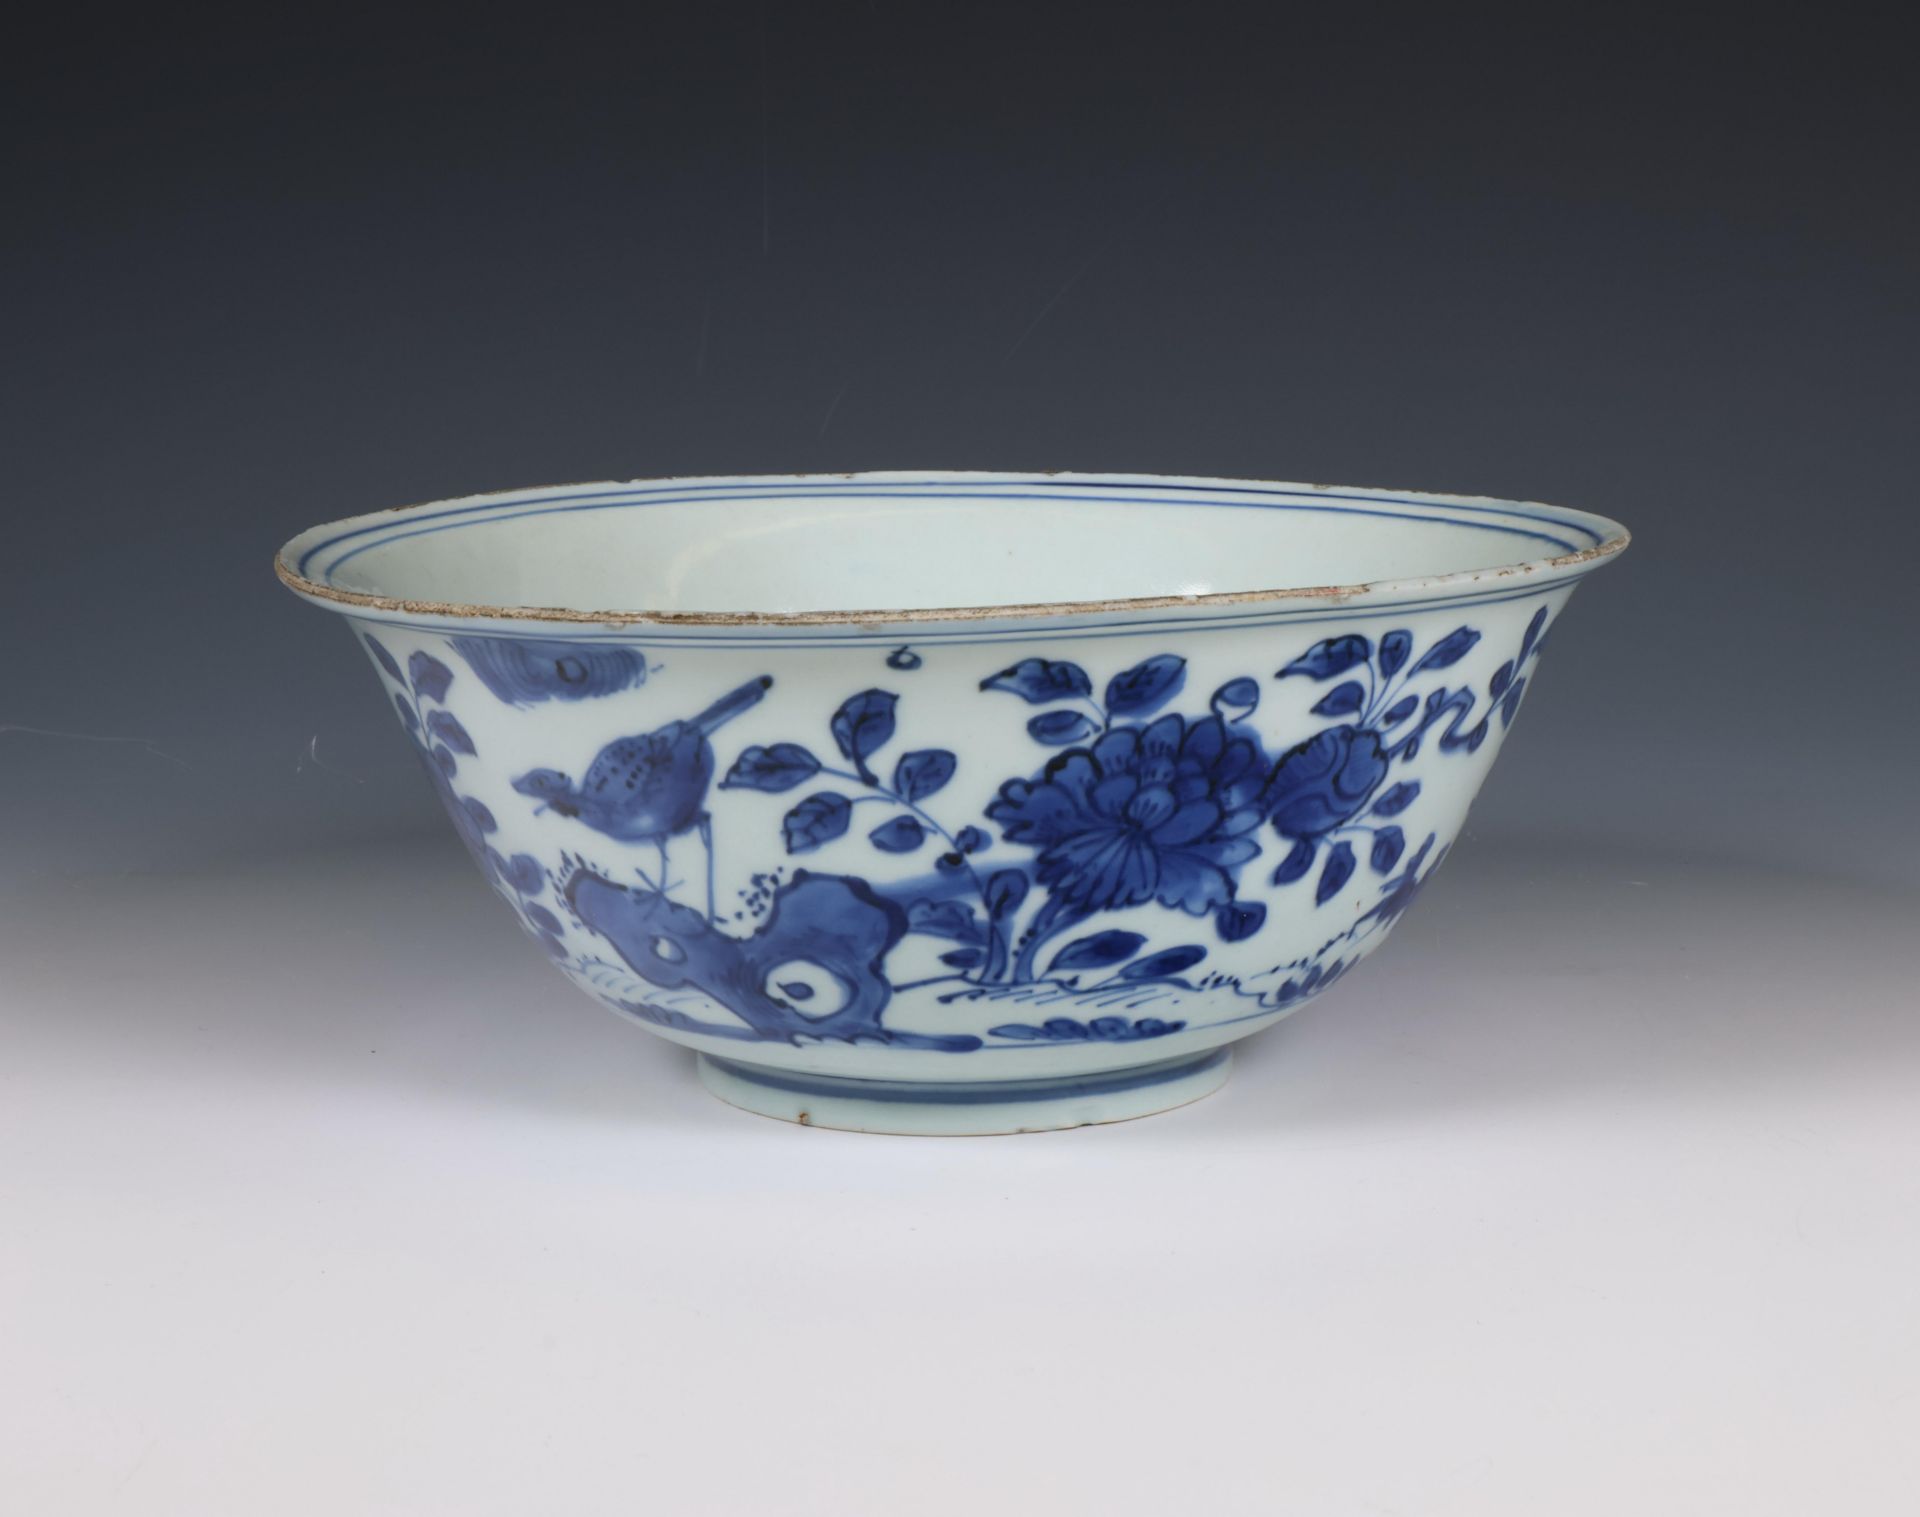 China, large blue and white porcelain bowl, 17th century,